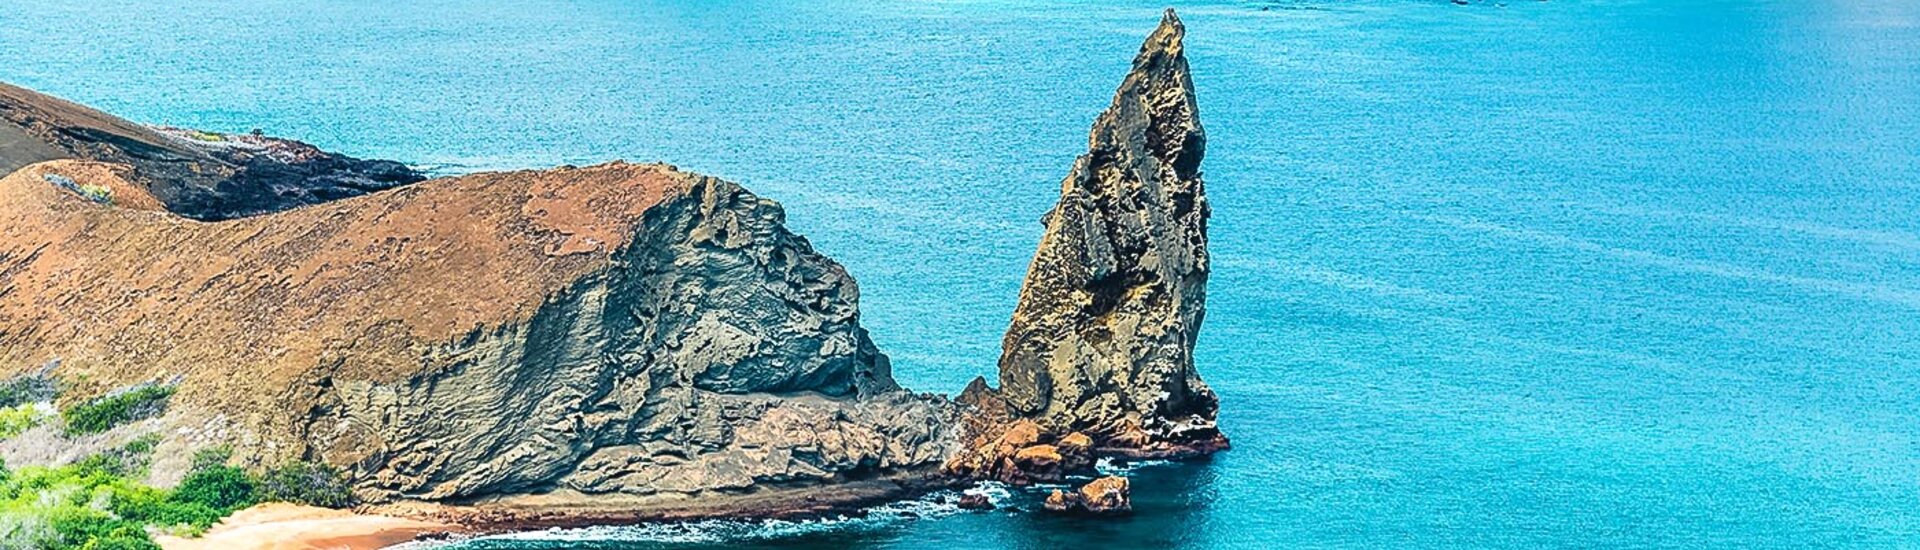 Der Pinnacle Rock an der Küste der Bartolome Insel, Galapagosinseln, Ecuador